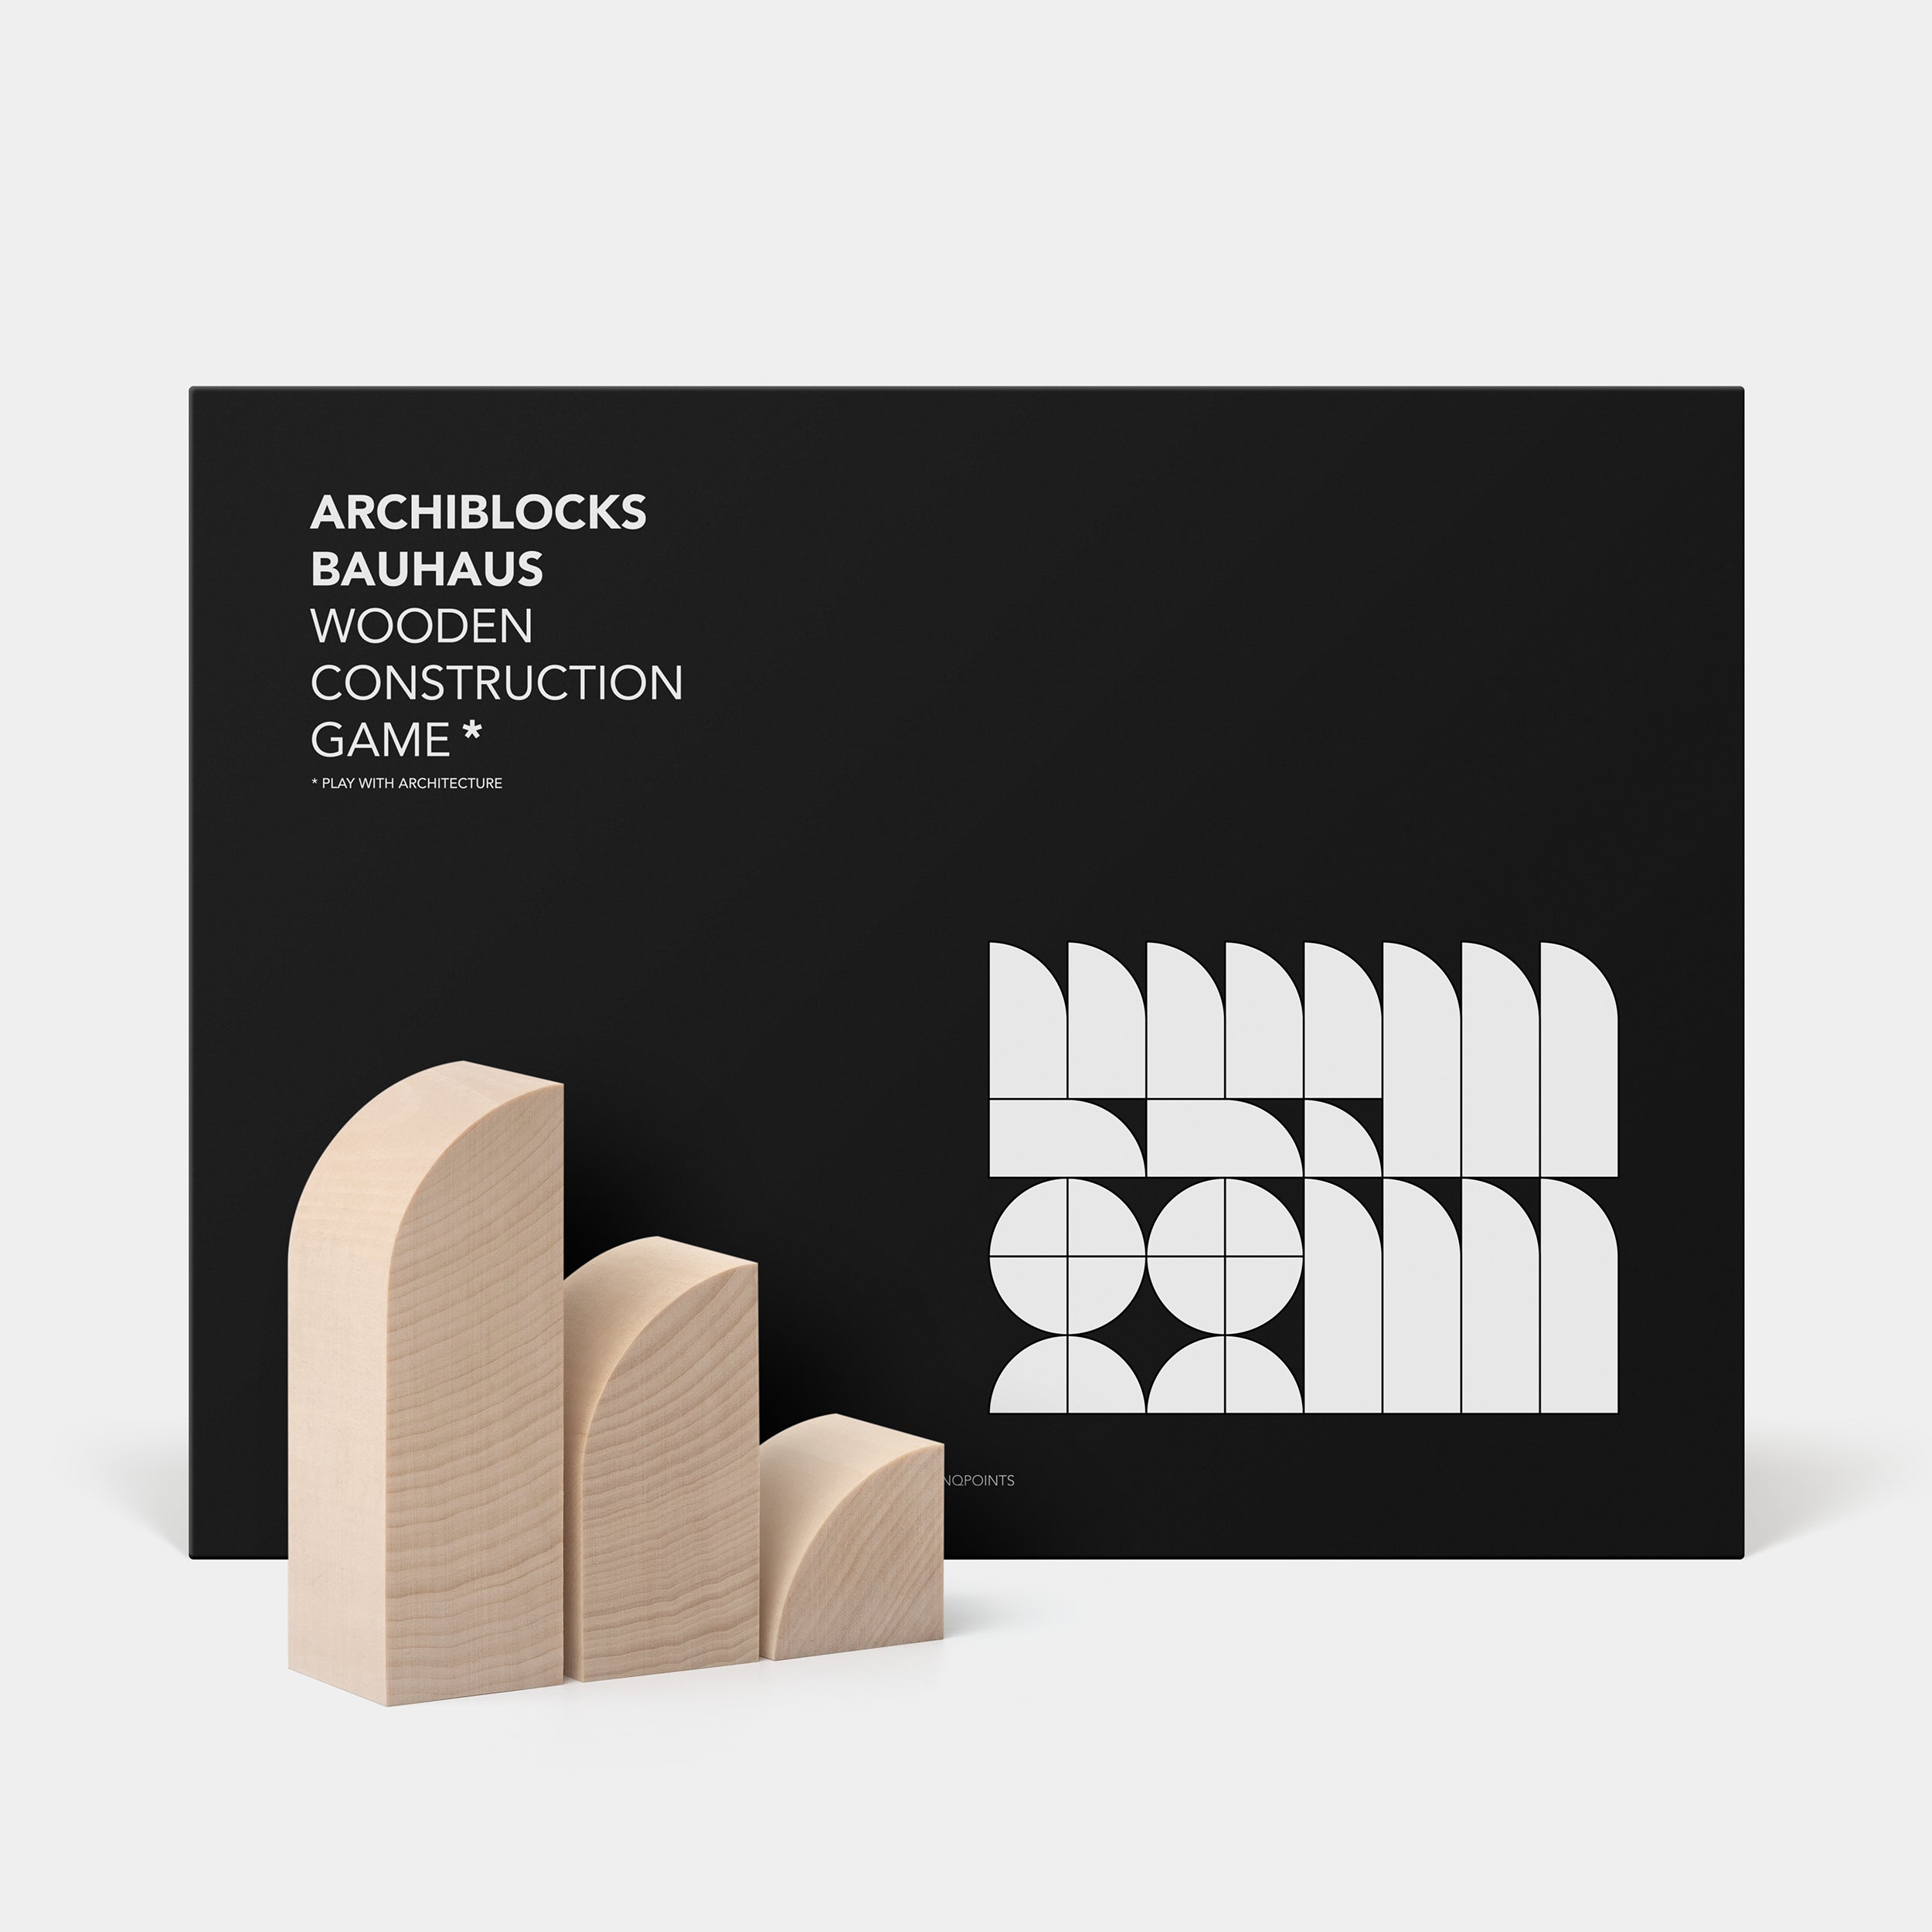 Archiblocks Bauhaus with box